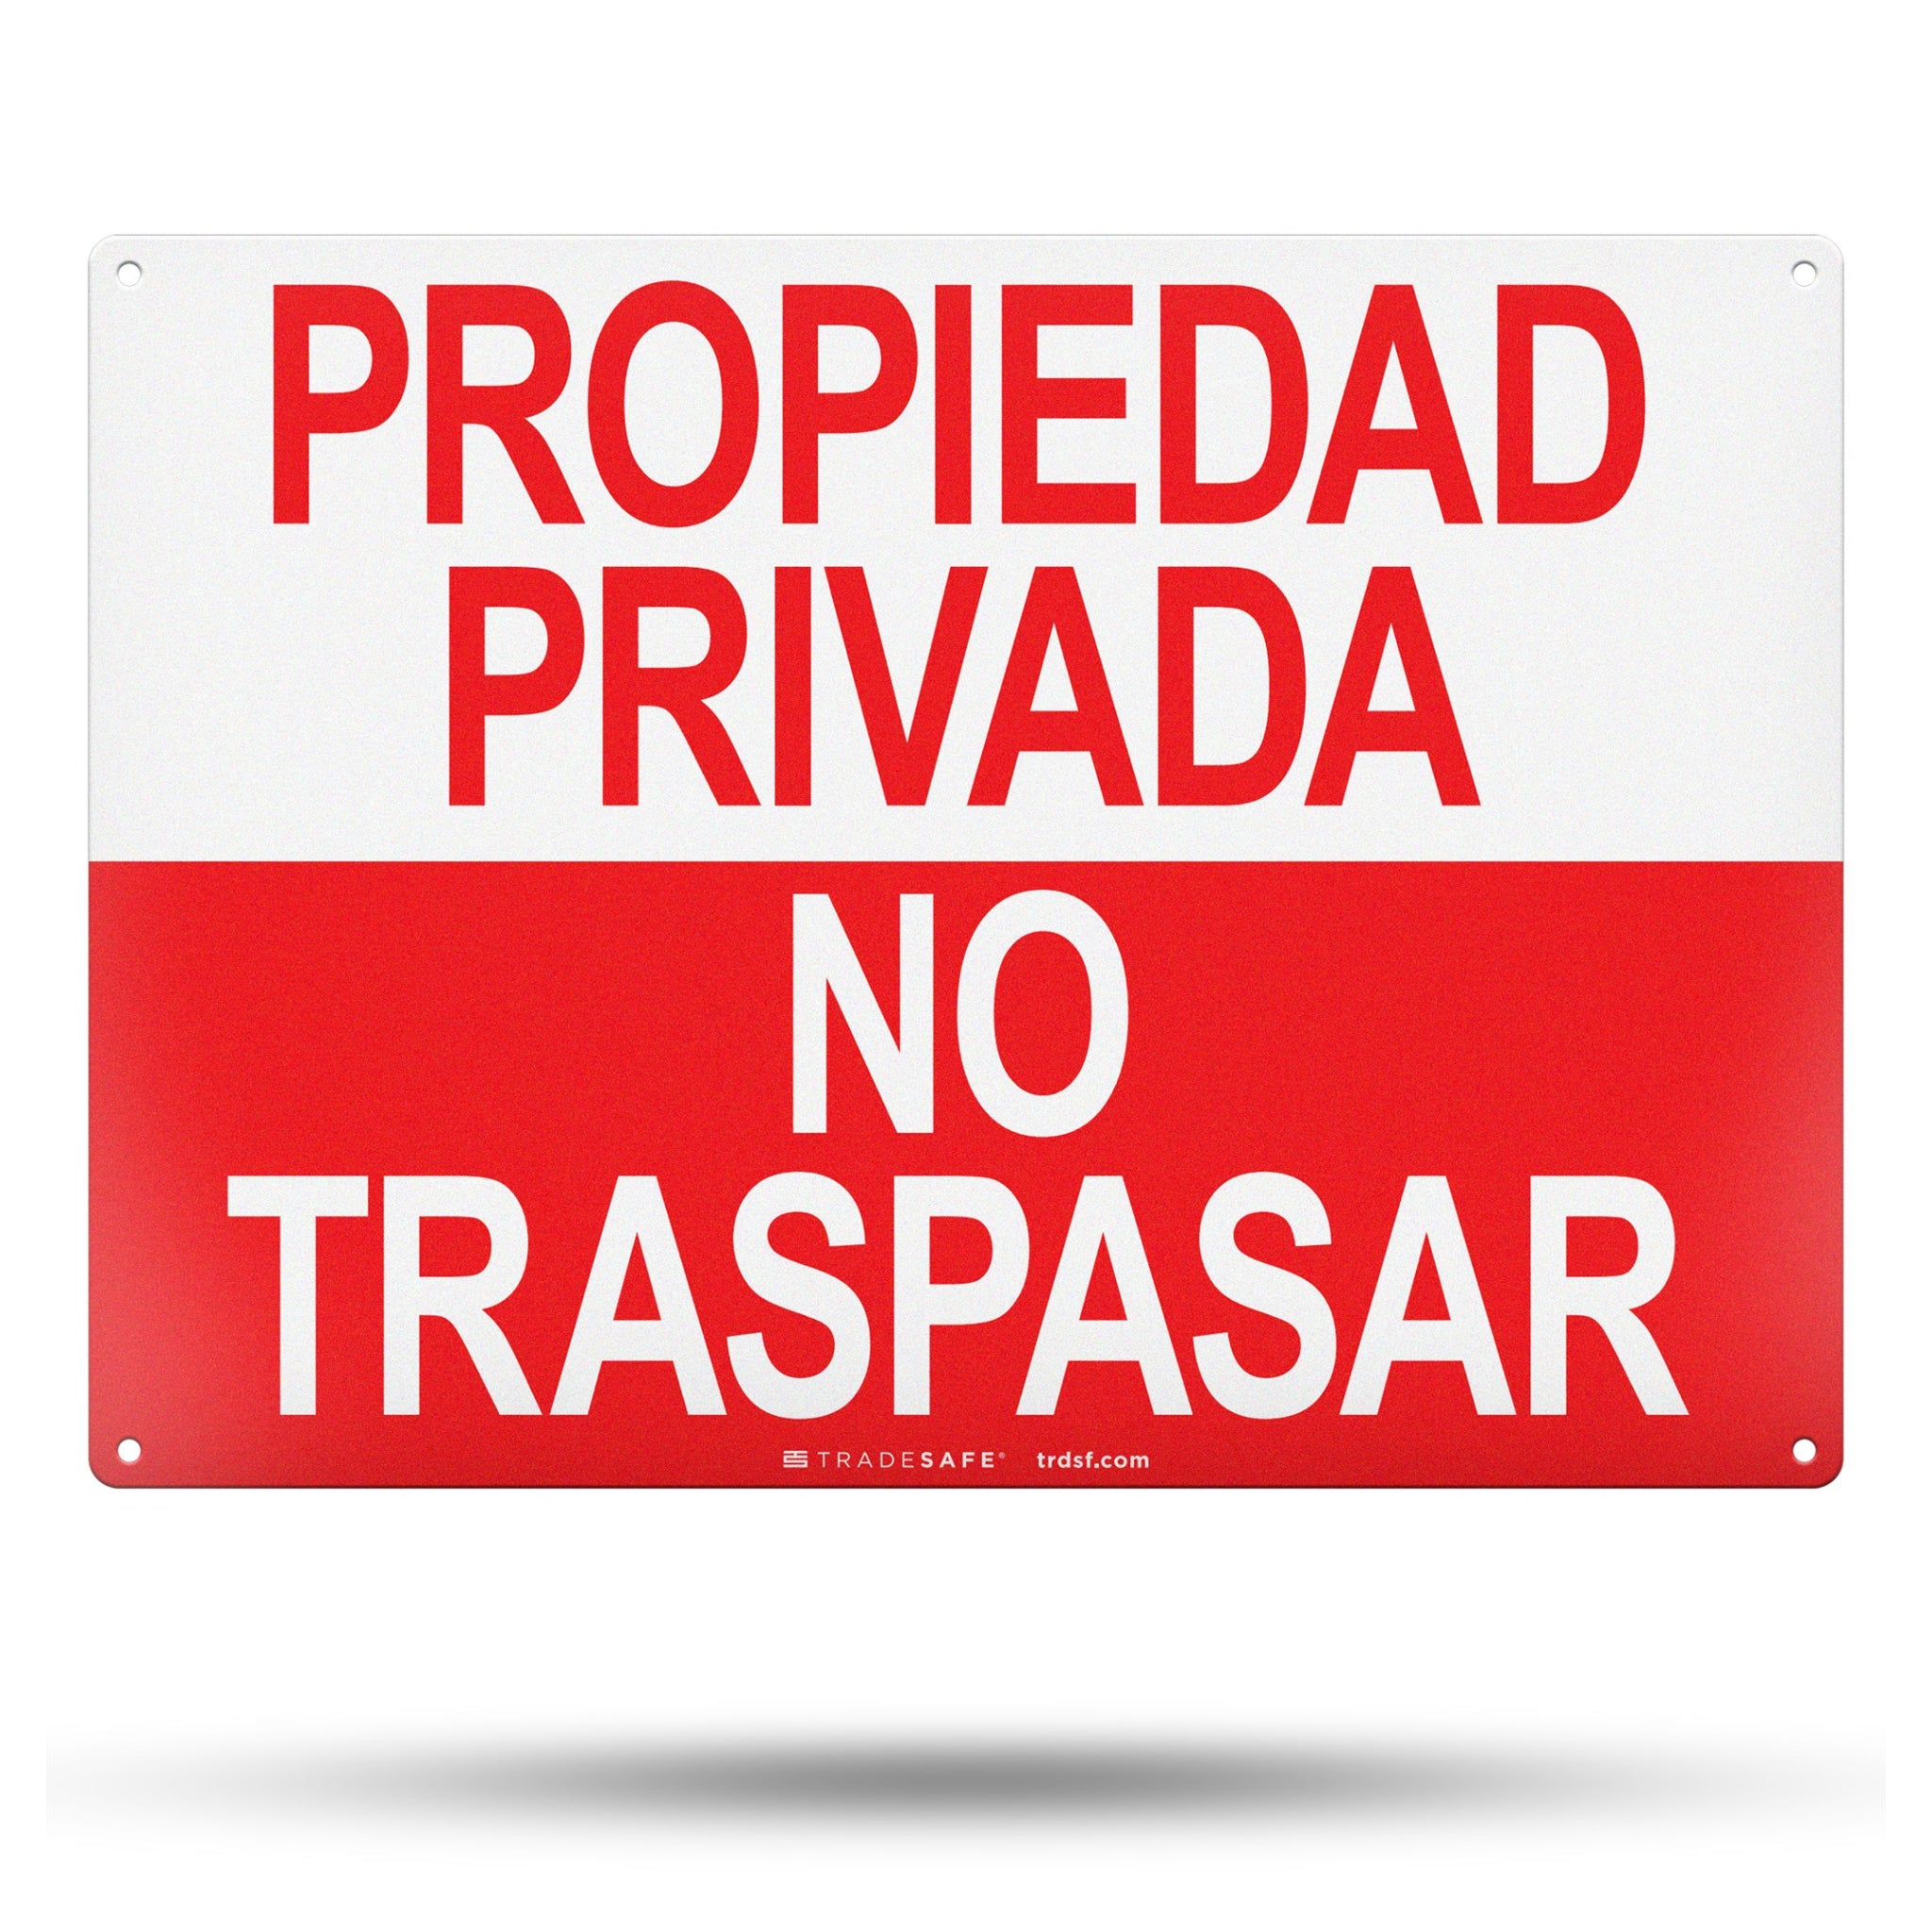 Propiedad Privada No Traspasar (Private Property No Trespassing) Aluminum Sign